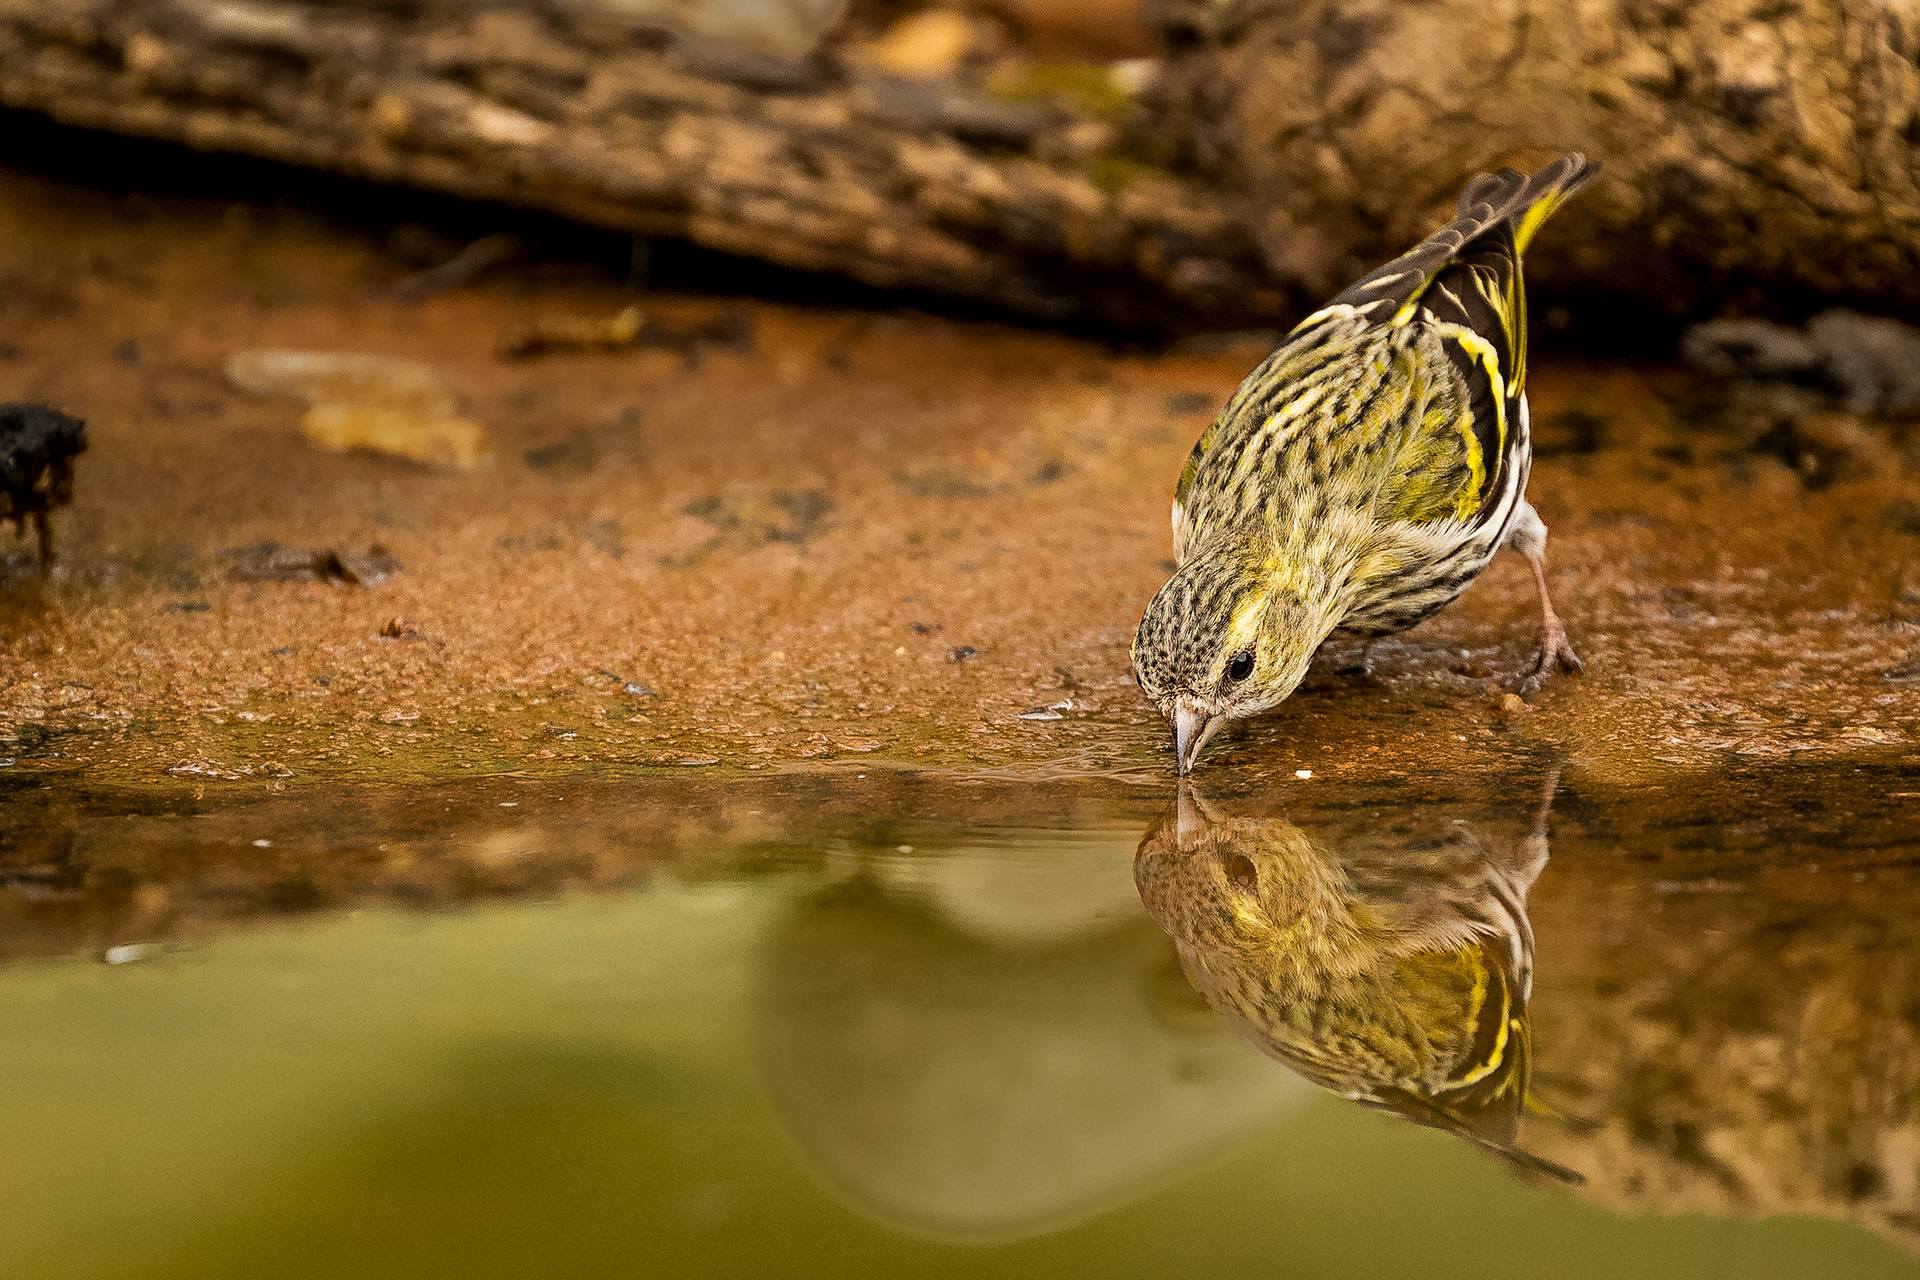 DIY, Reflection pool / feeding station for bird photography